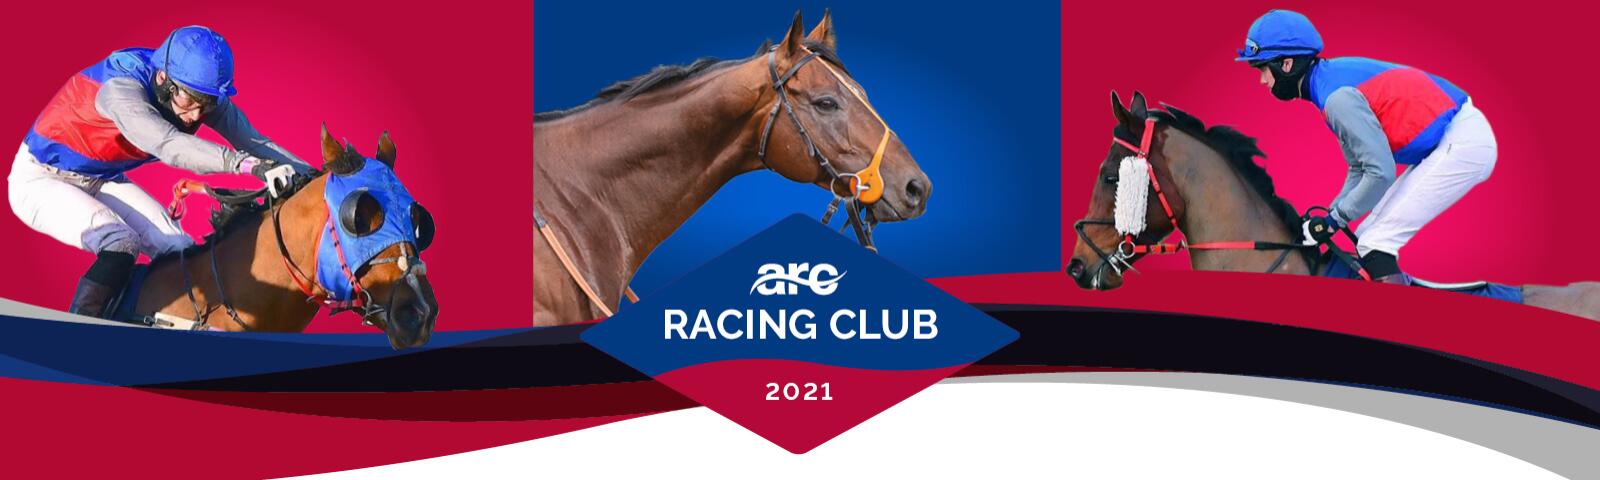 ARC Racing Club